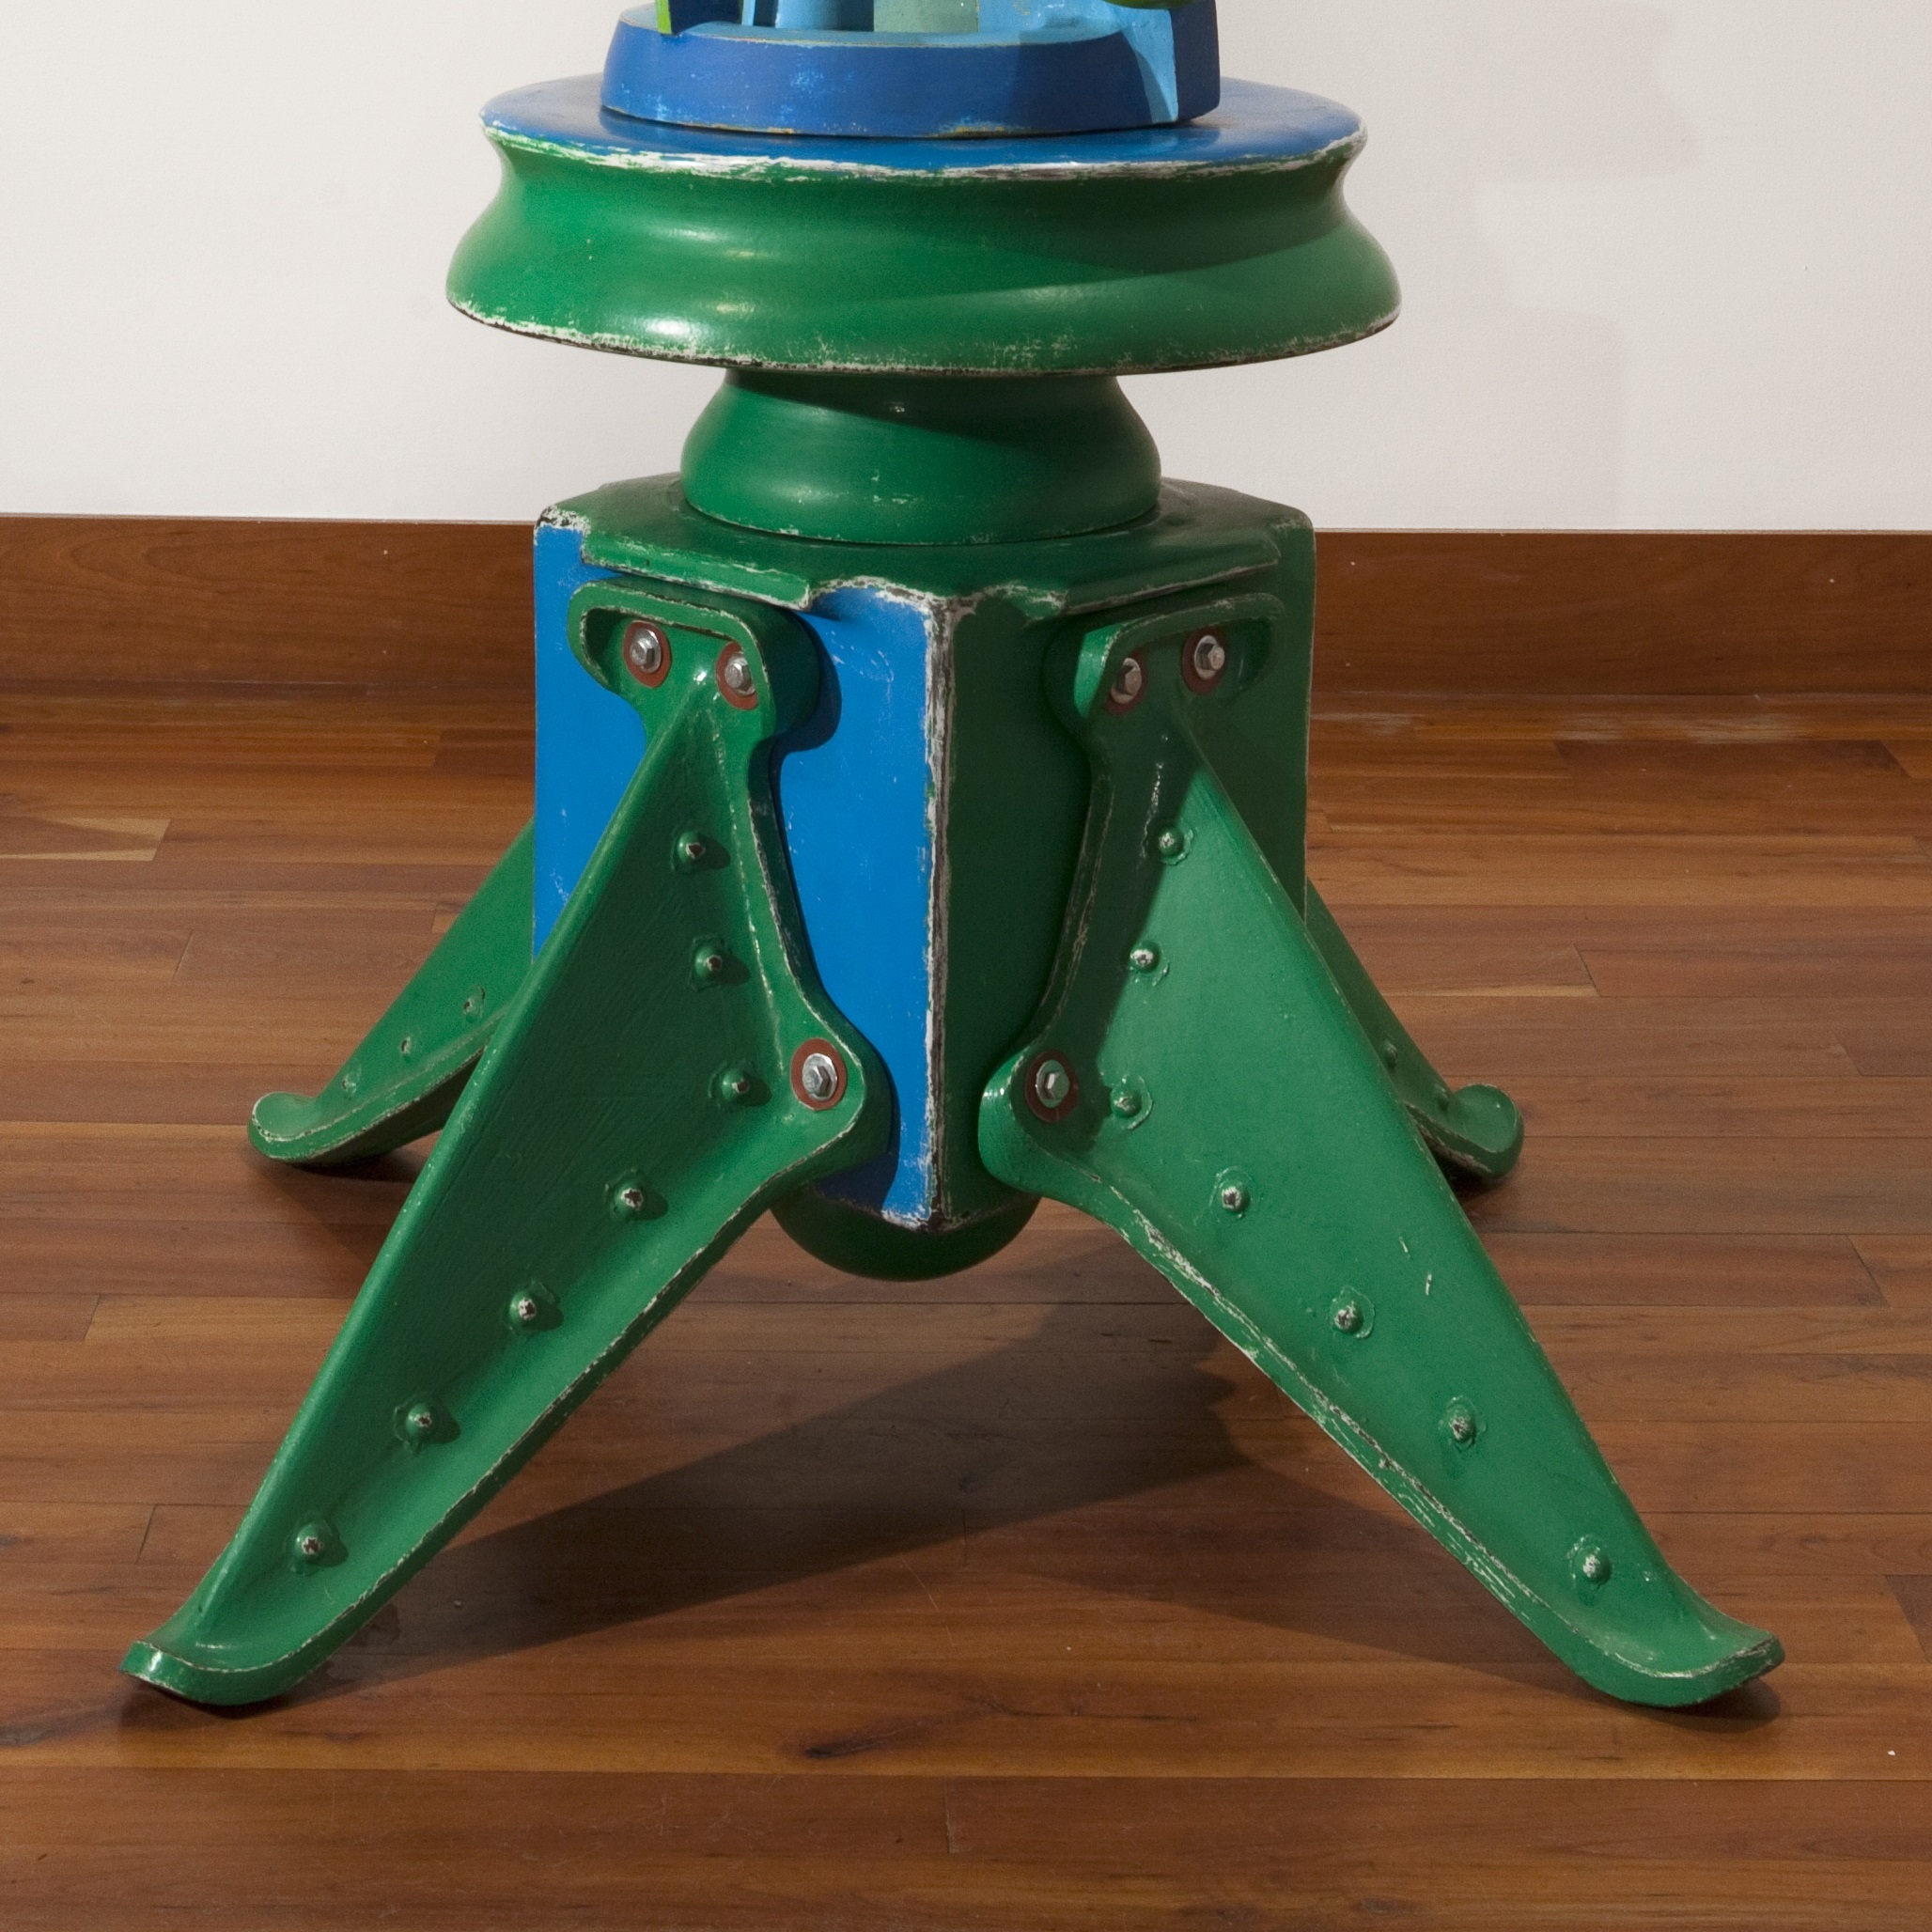 

											Doug Herren</b>

											<em>
												Selected Works</em> 

											<h4>
												Santa Fe: December 30 - March 18, 2023											</h4>

		                																																Doug Herren,  
																																								<i>Blue Green Stand,</i>  
																																								2012, 
																																								ceramic, enamel paint, 
																																								30 1/2 x 34 1/2 x 34 1/2 inches 
																								
		                				